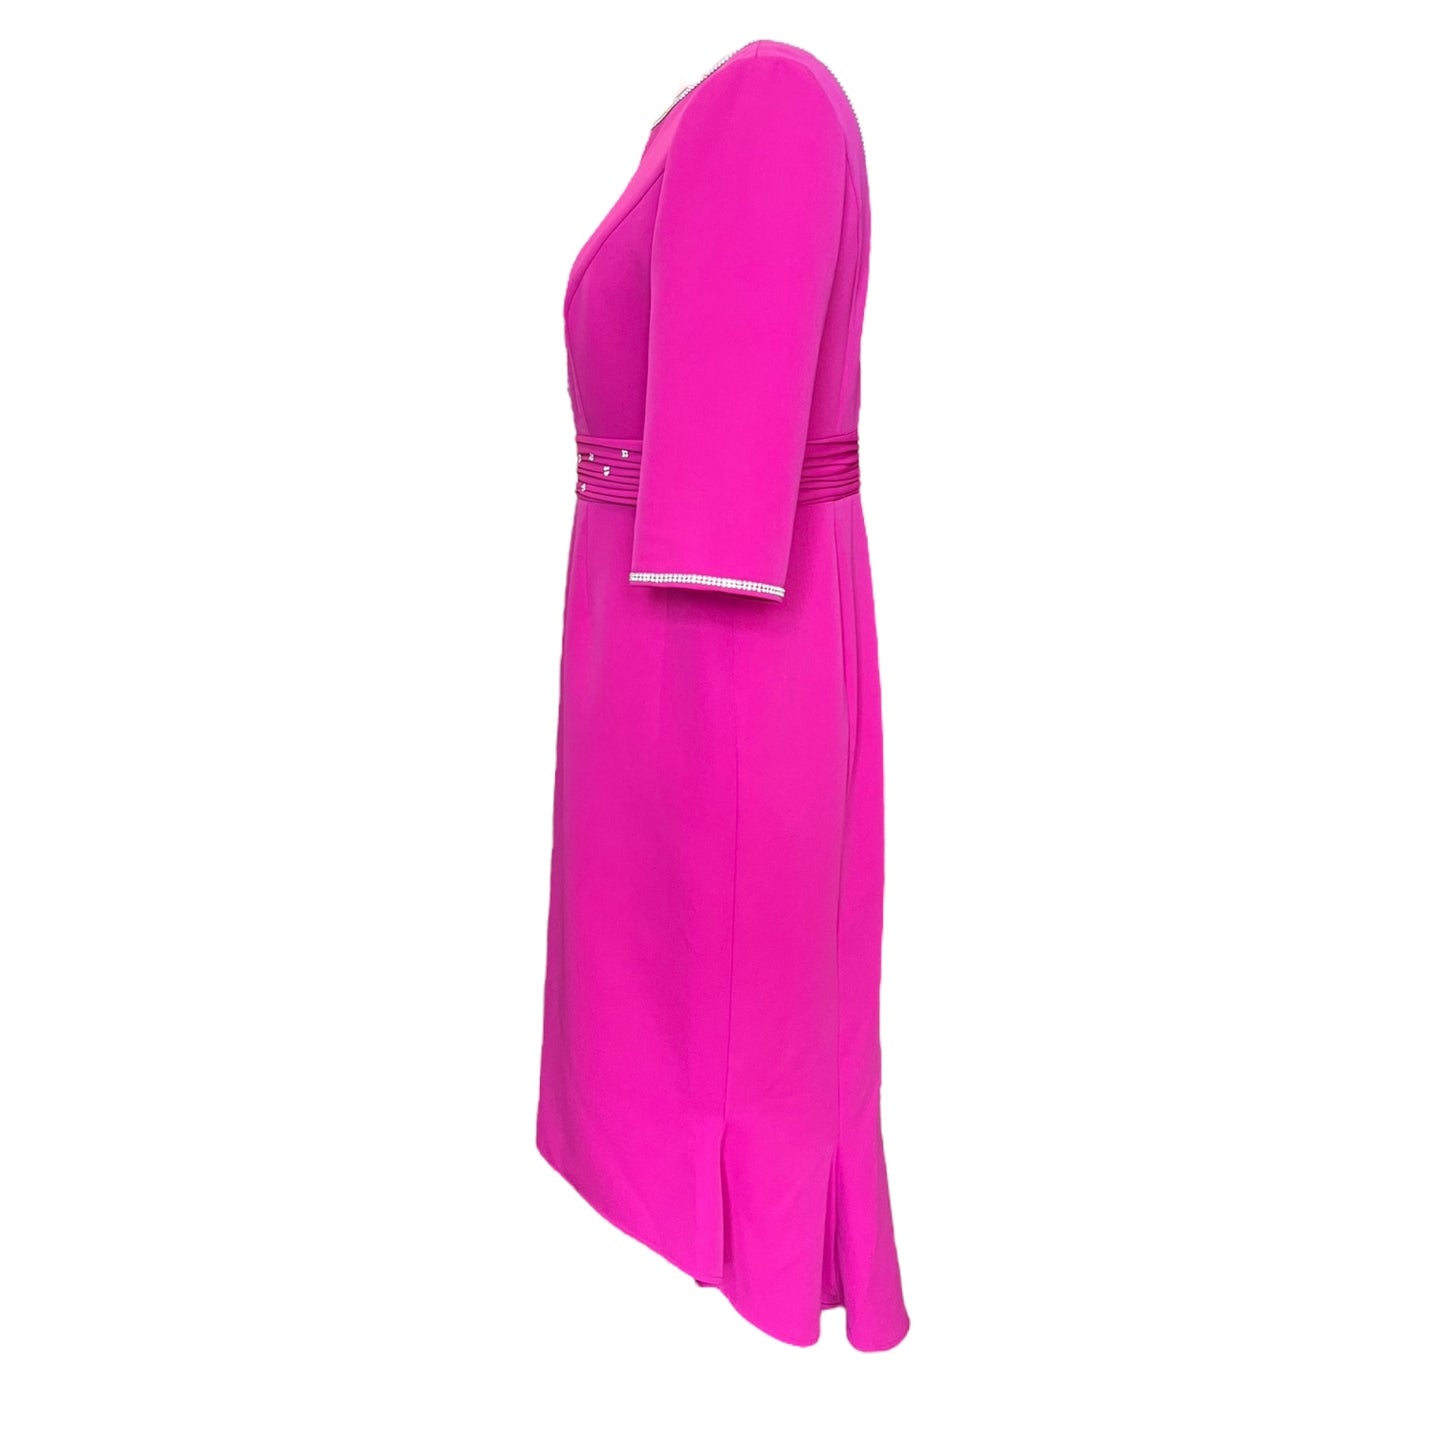 Gabriela Cerise Pink Dress - 16